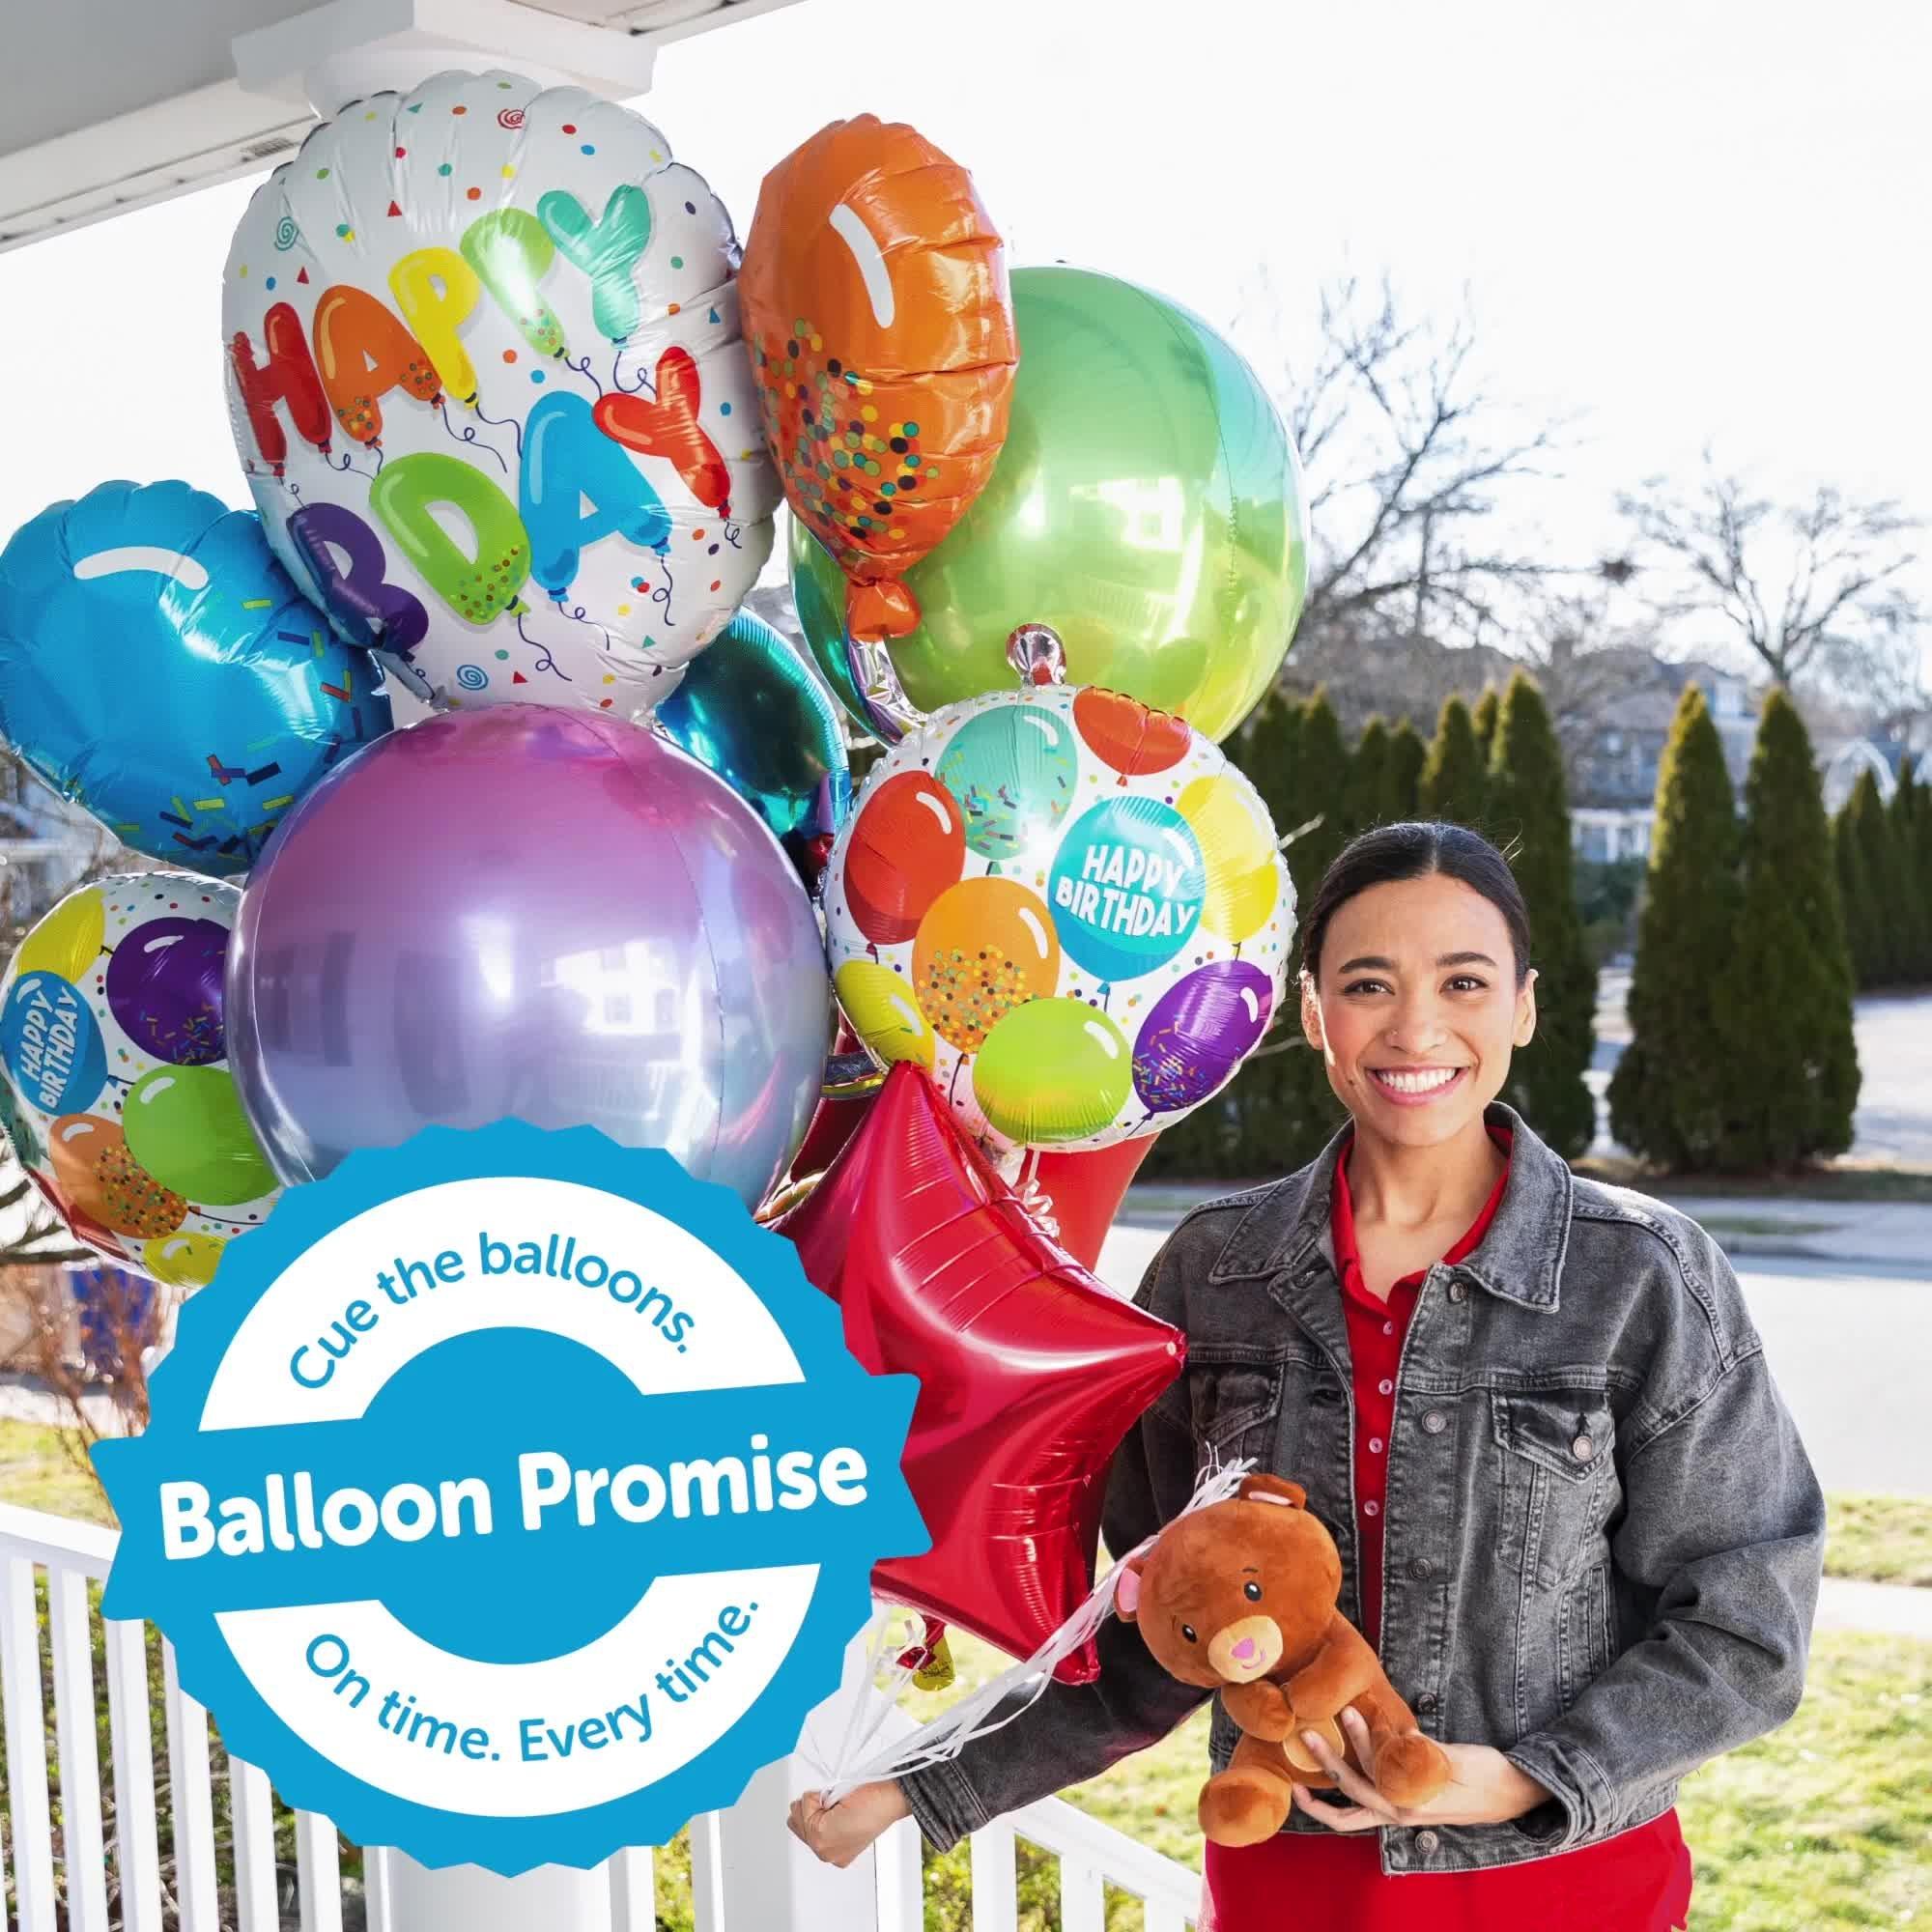 Premium Little Miss One-derful 1st Birthday Foil Balloon Bouquet with Balloon Weight, 13pc